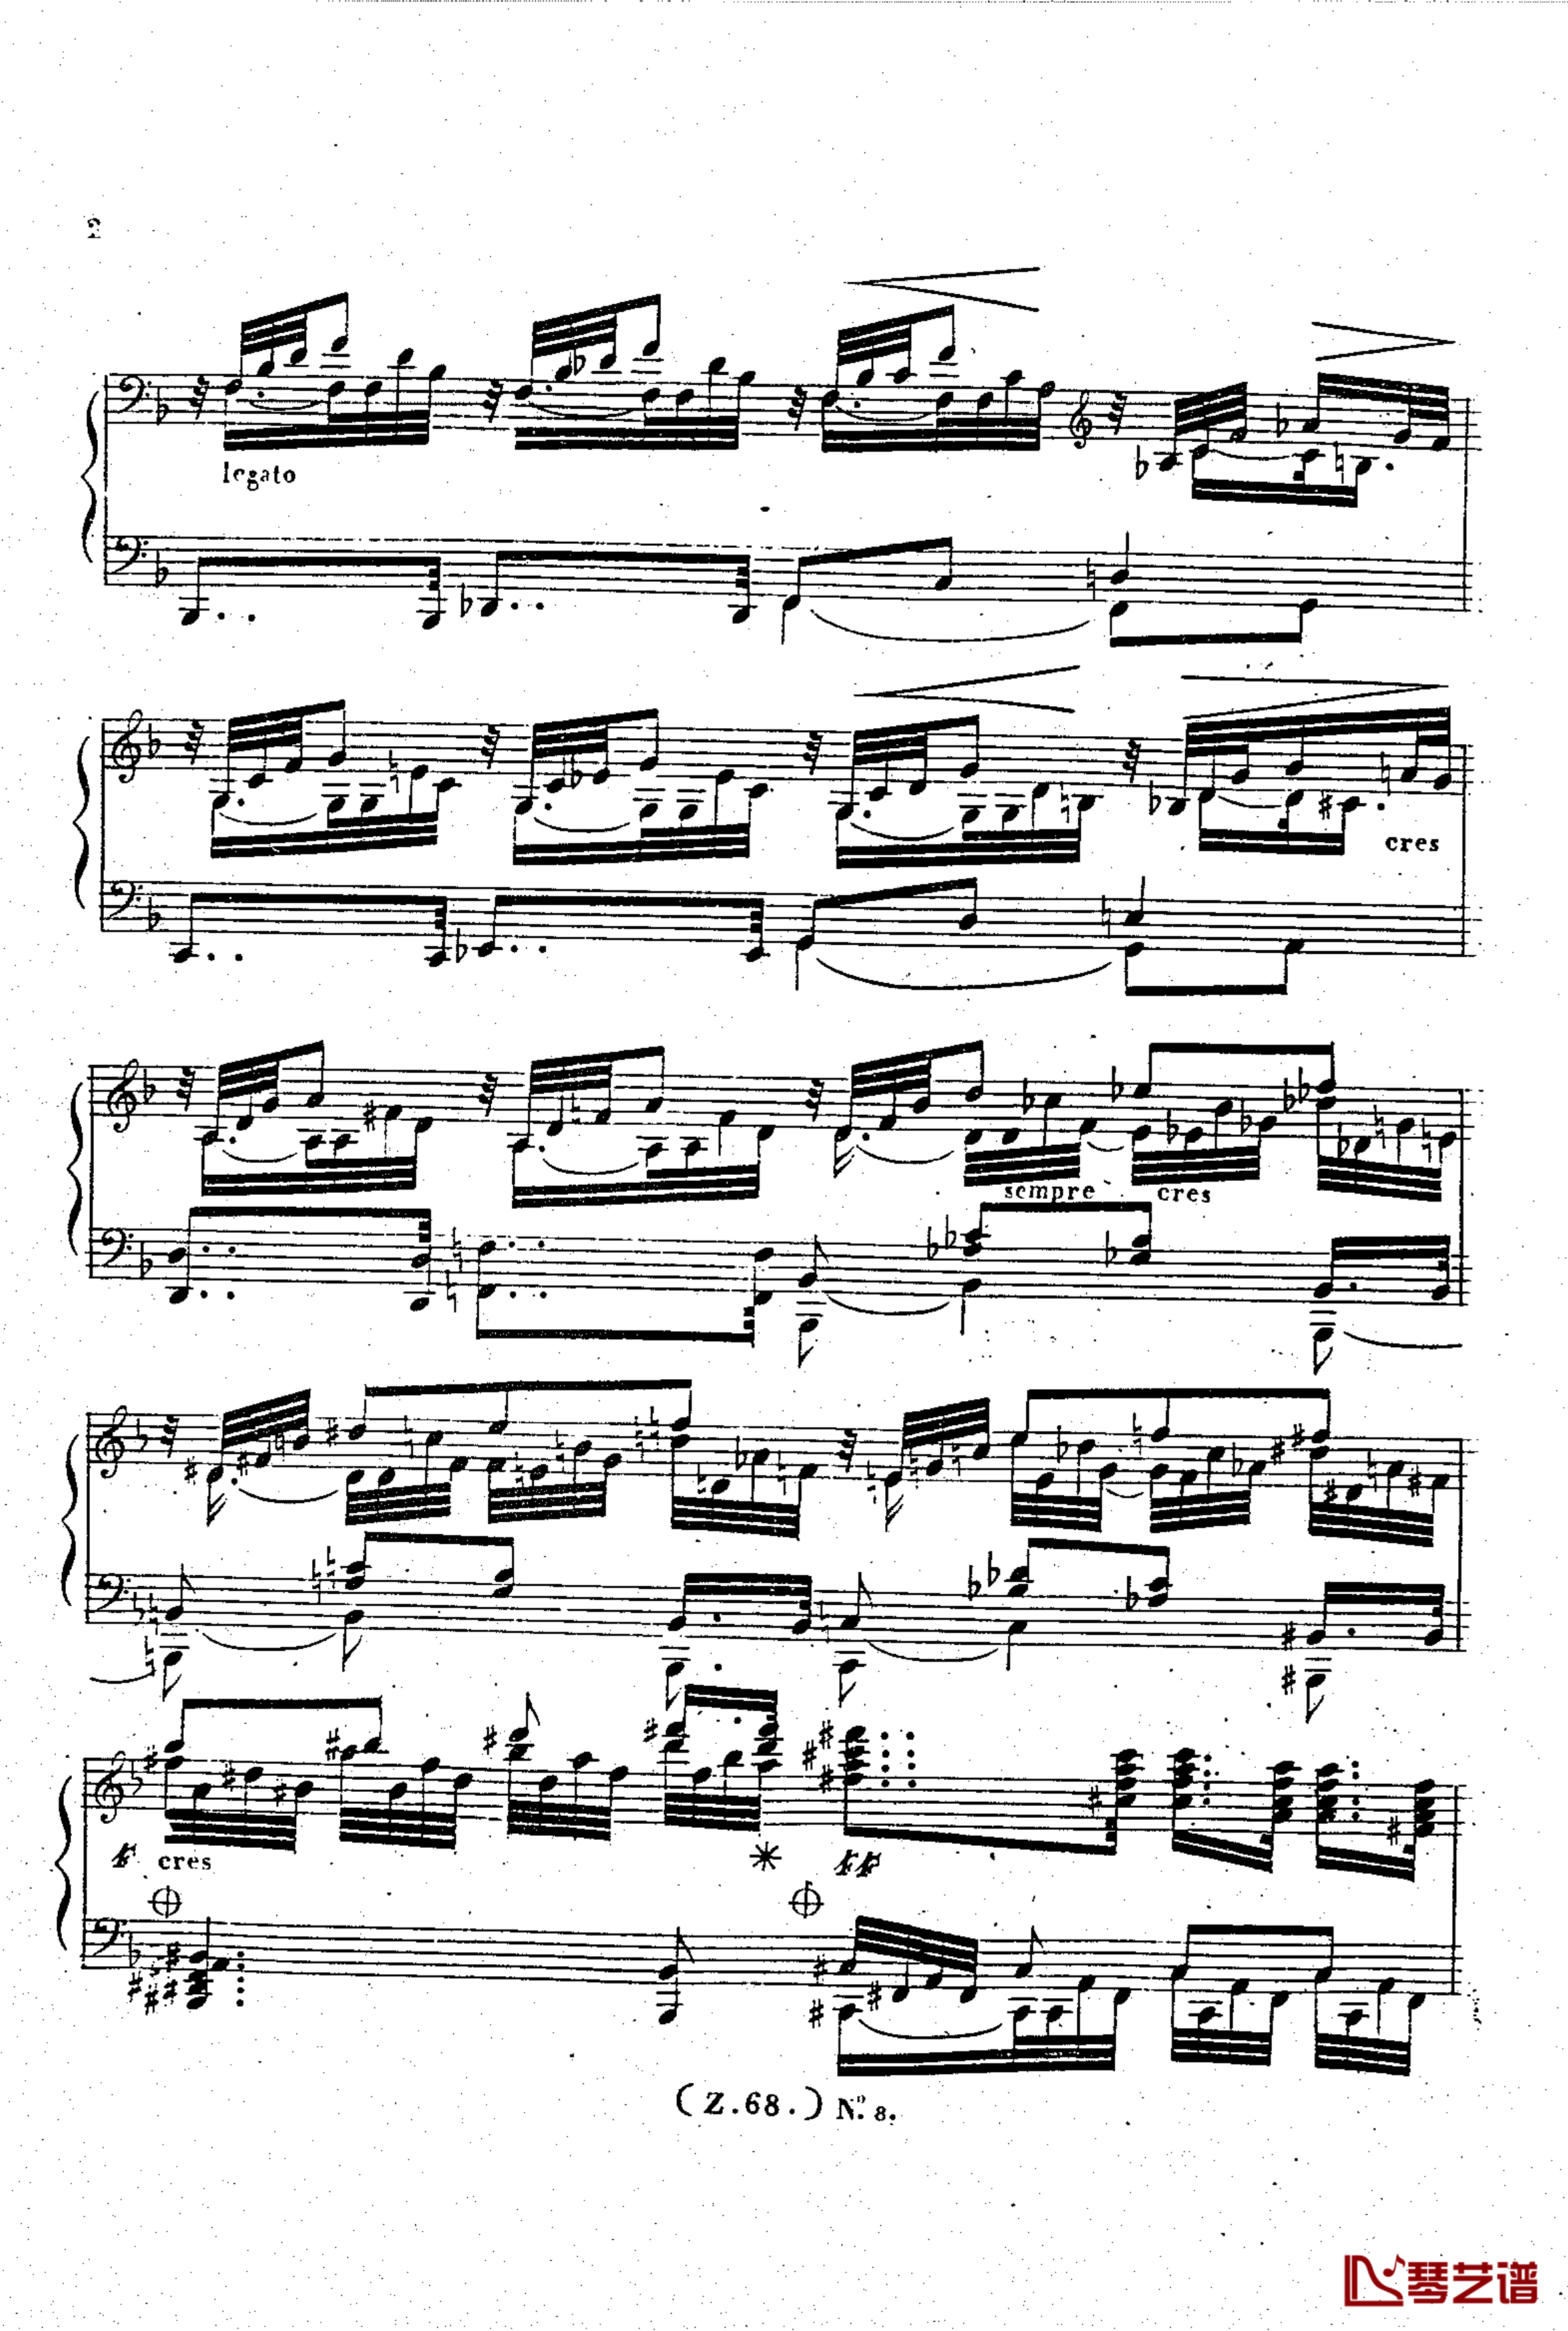  d小调第六钢琴奏鸣曲 Op.124钢琴谱-车尔尼-Czerny3